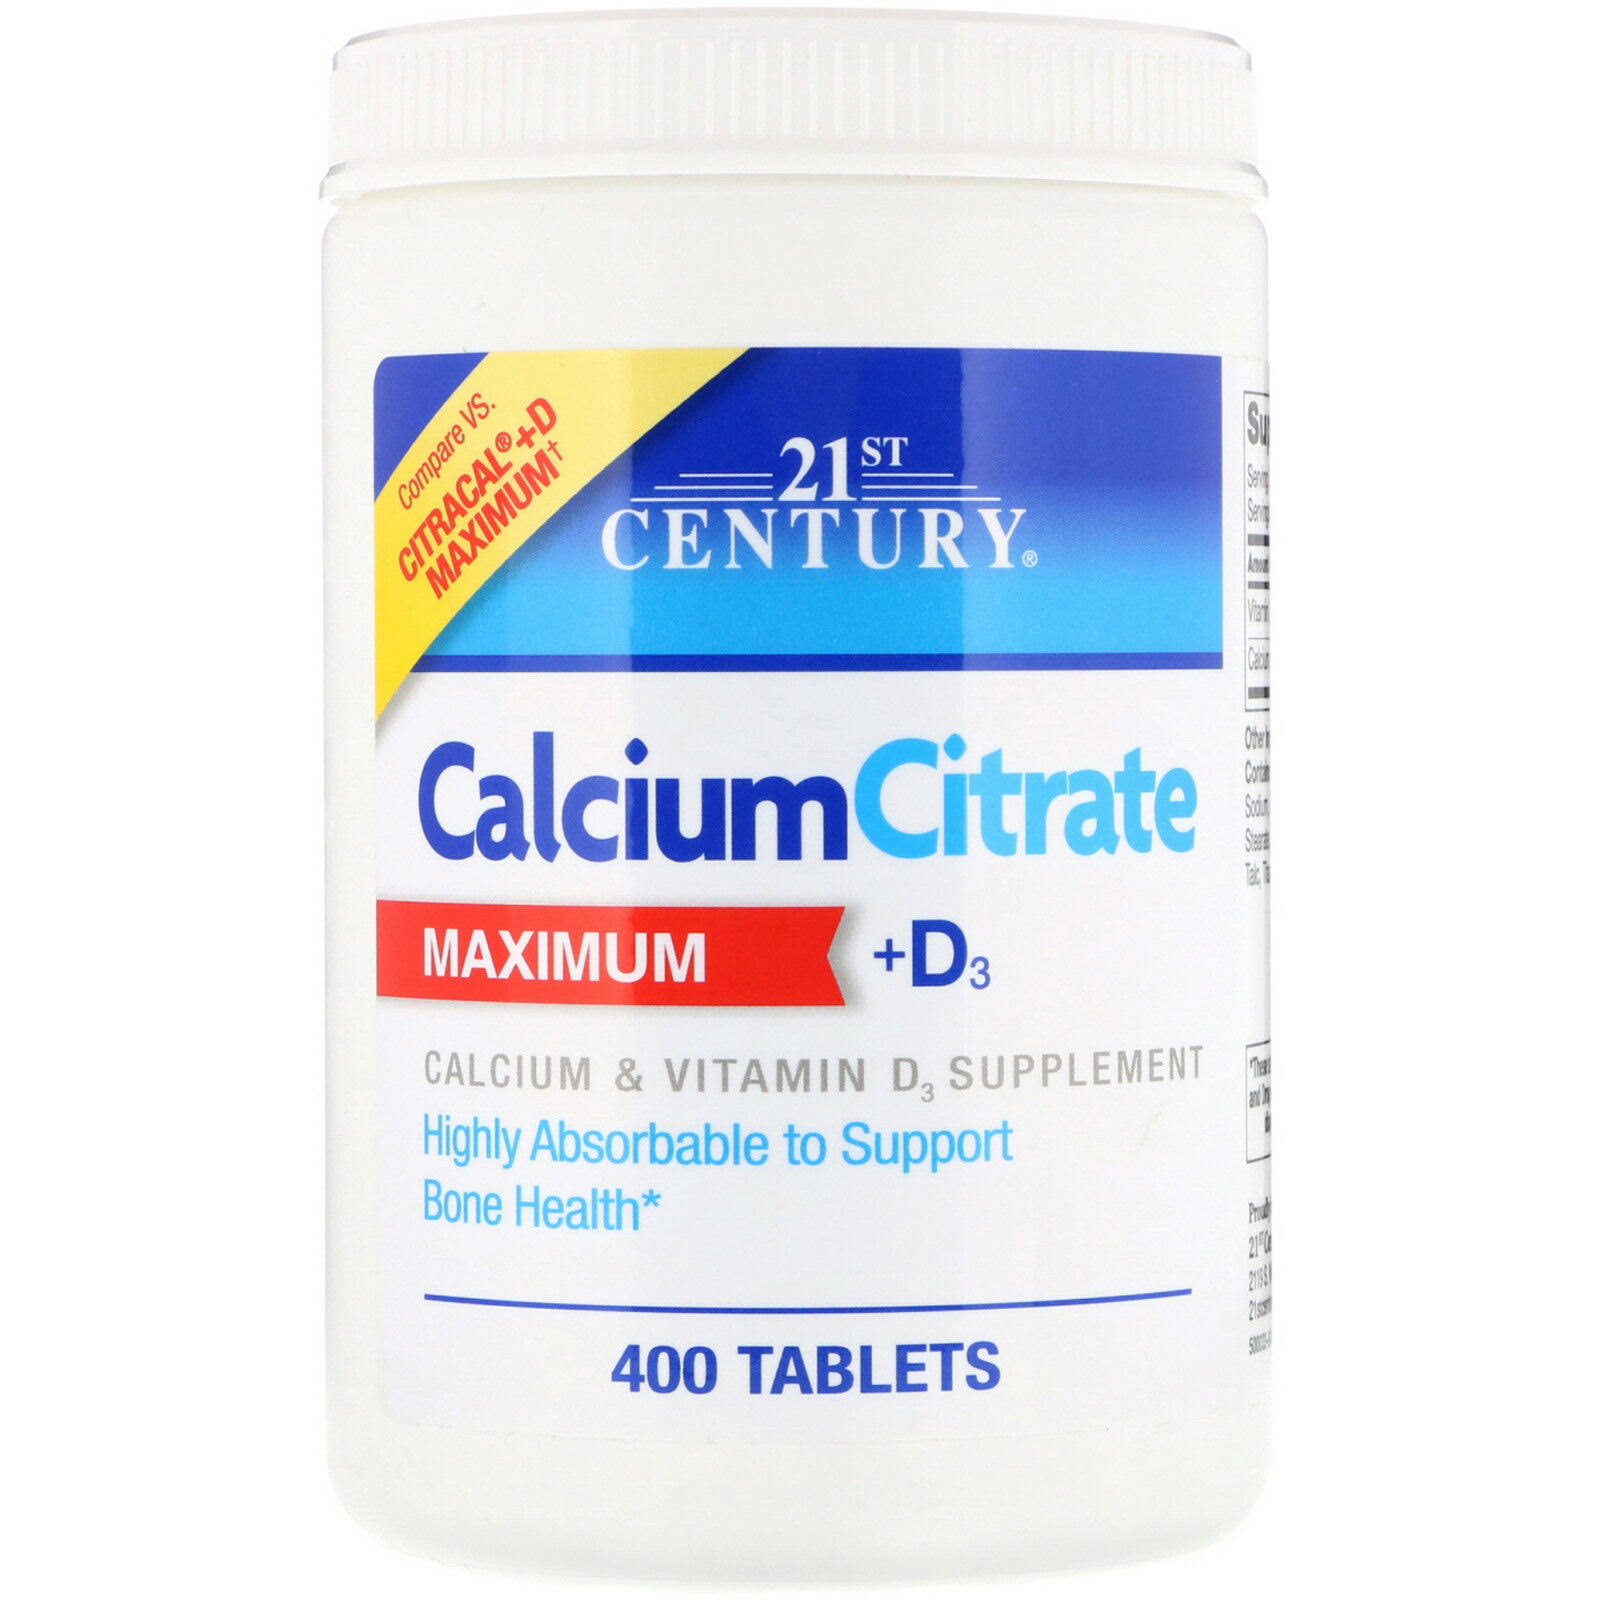 21st Century Calcium Citrate Plus D3 Maximum Tablets - 400 Tablets